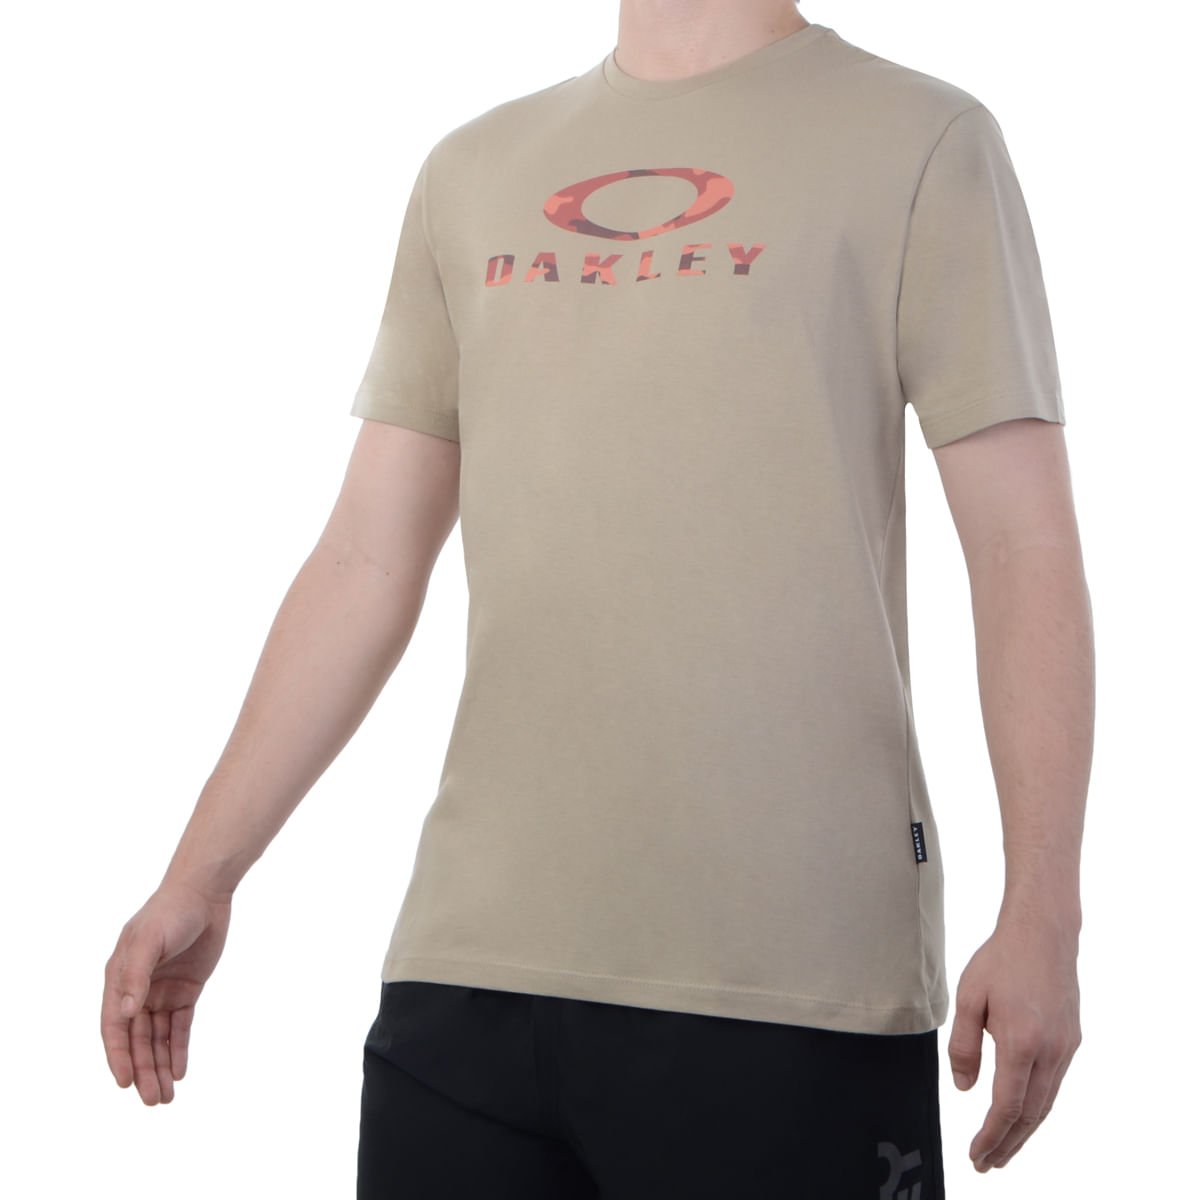 Camiseta Masculina Oakley Mod Daily Sport Tee - overboard